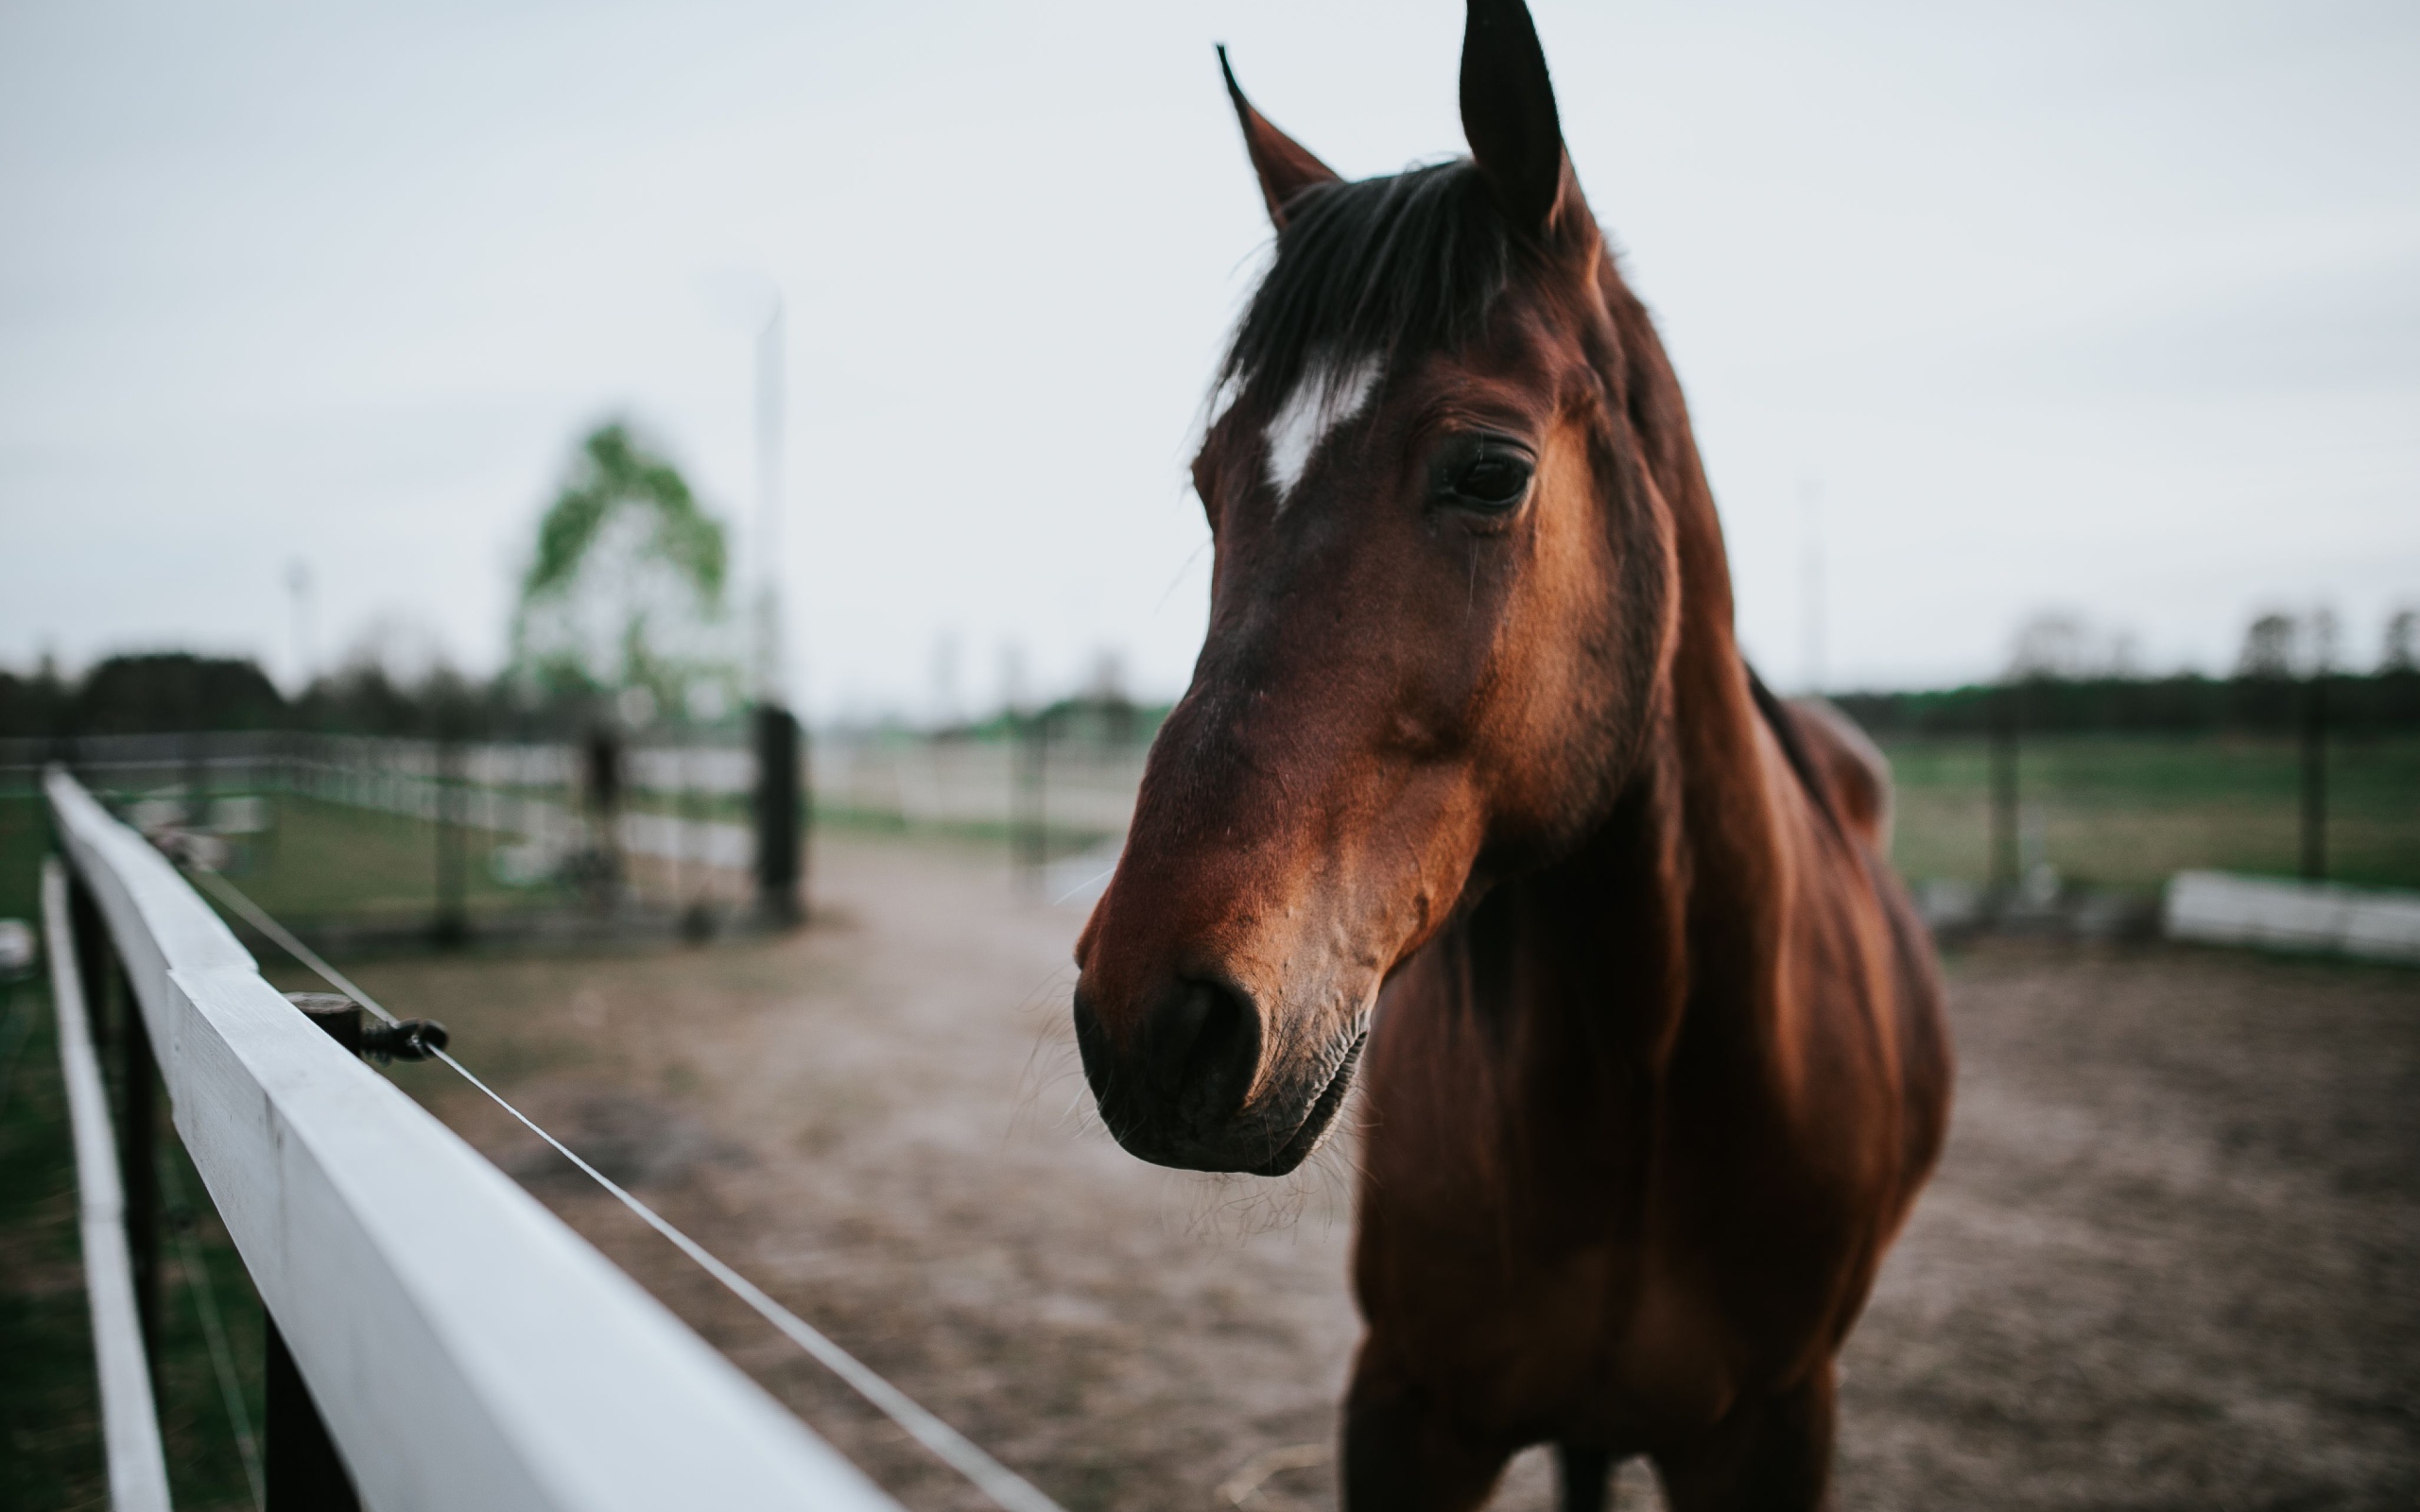 Beautiful brown horse on a farm closeup